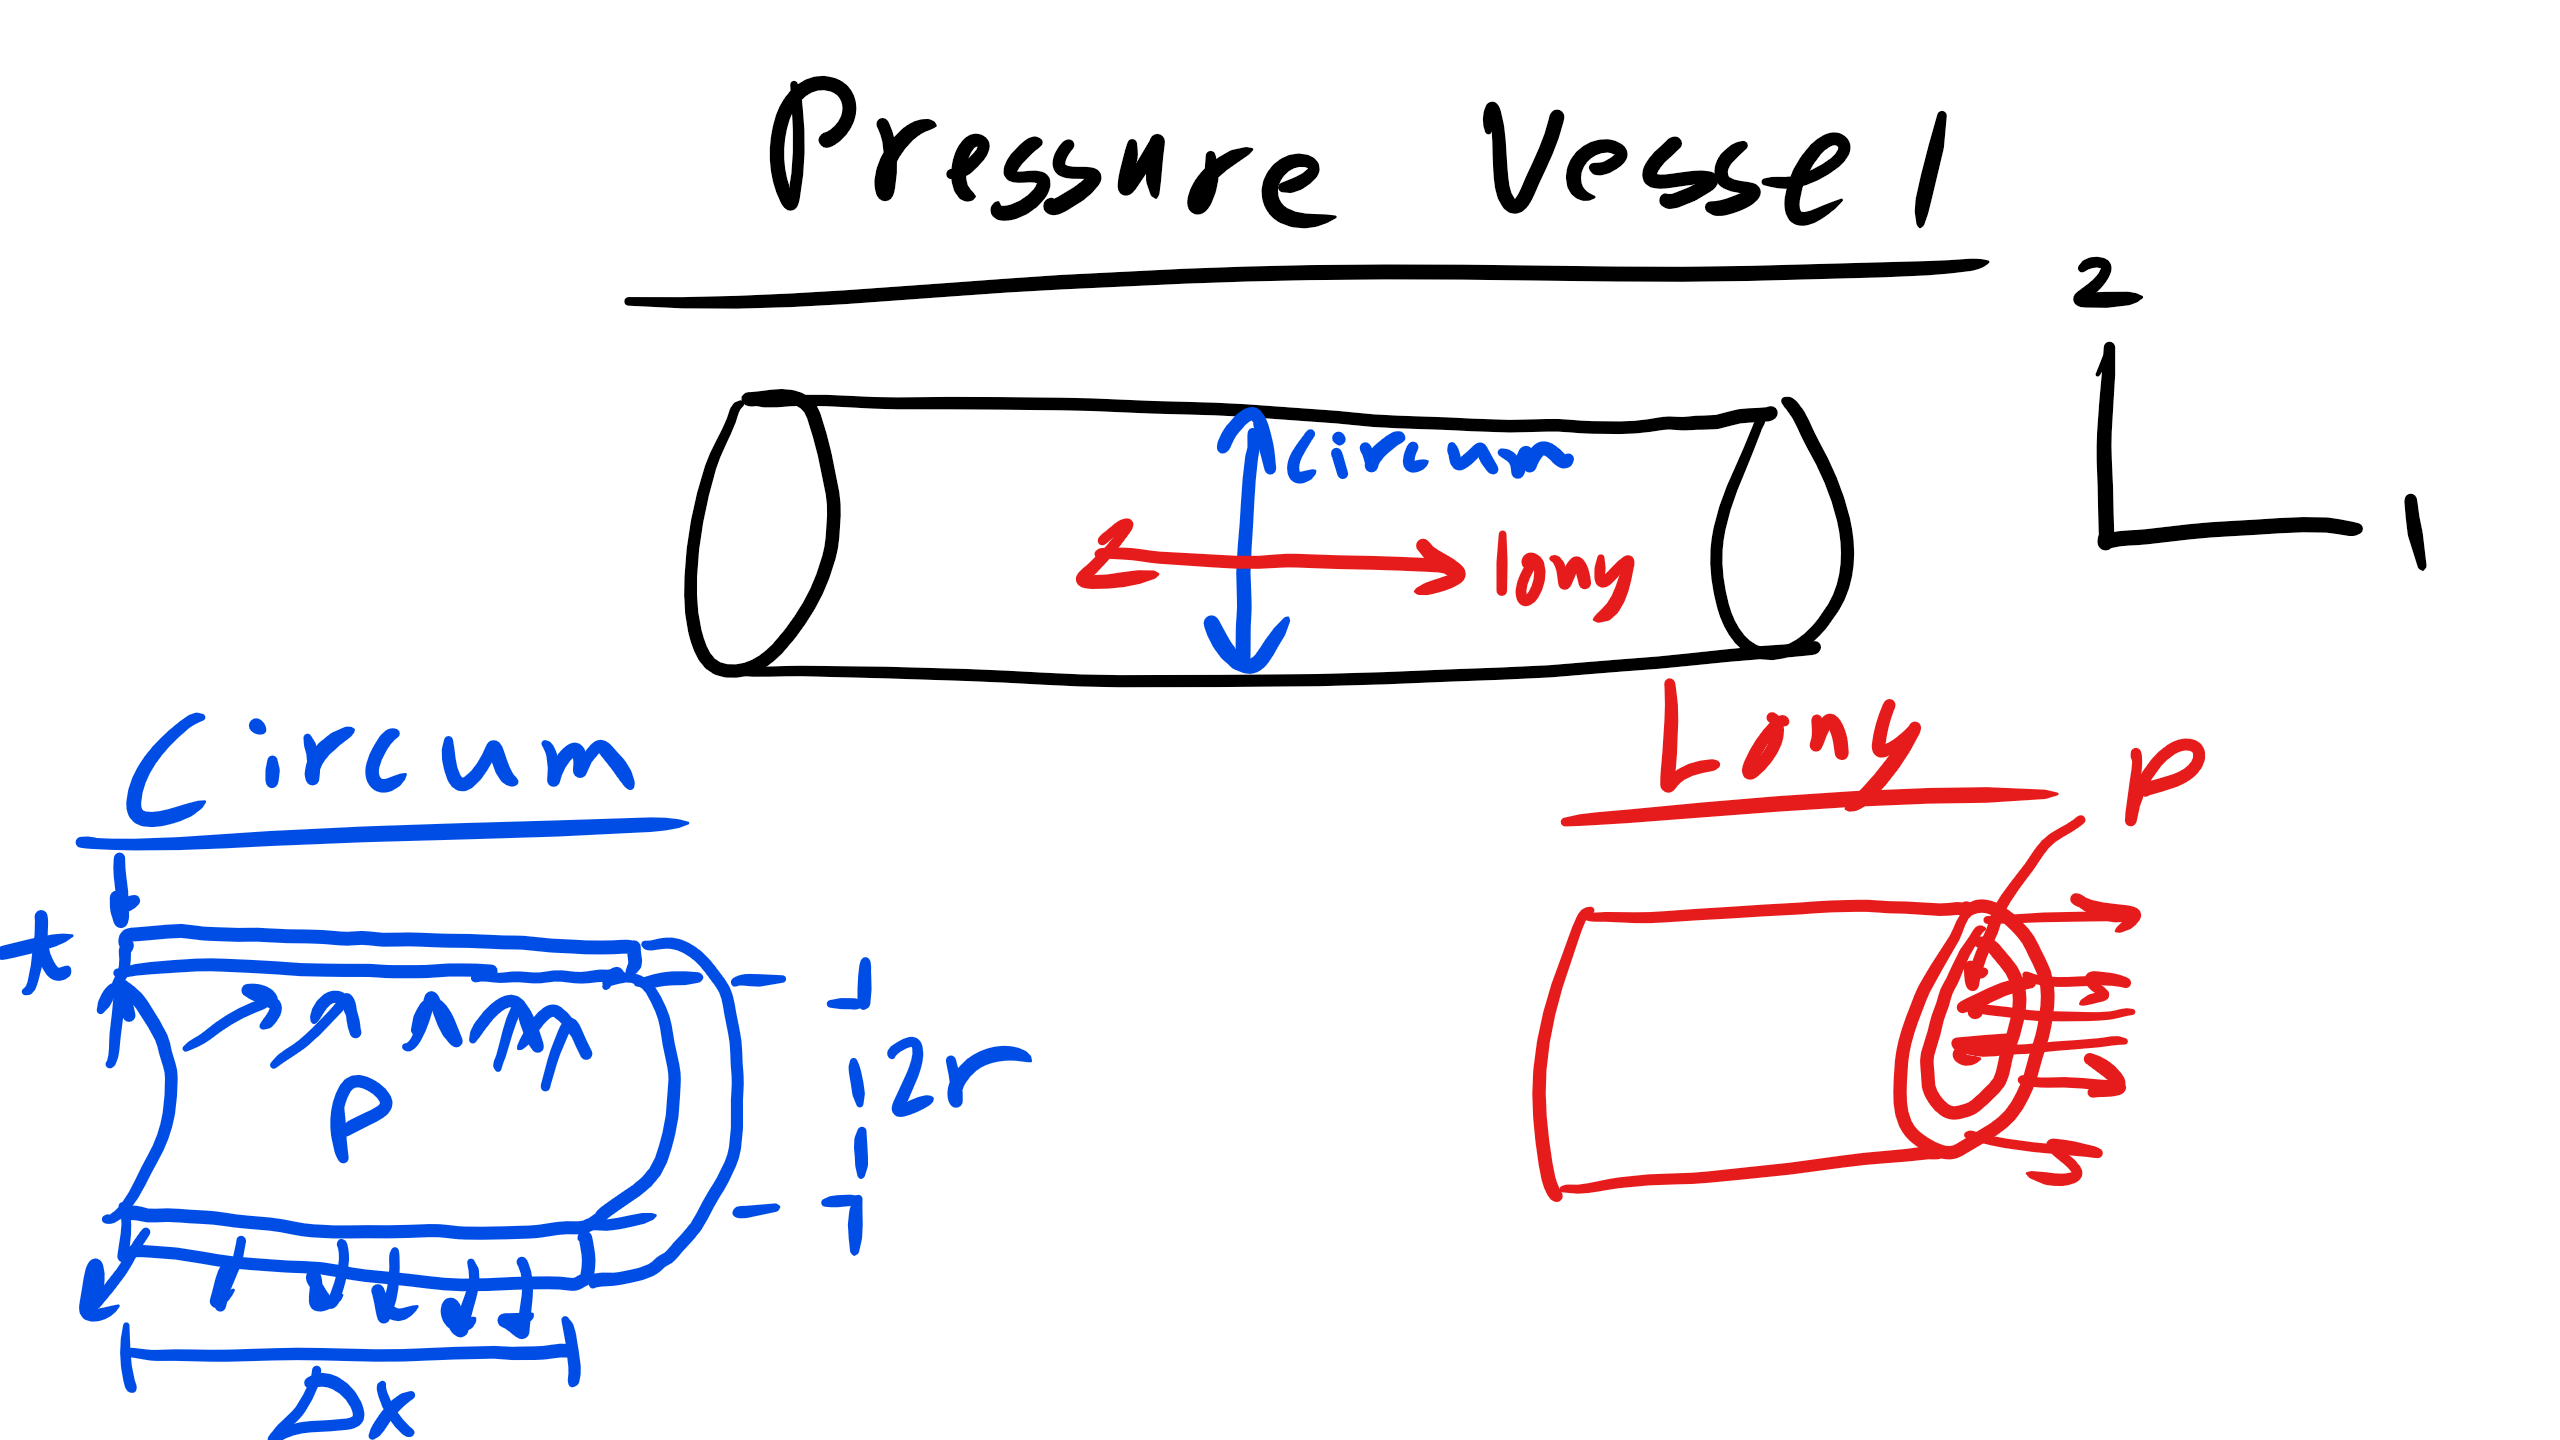 pressureves.png